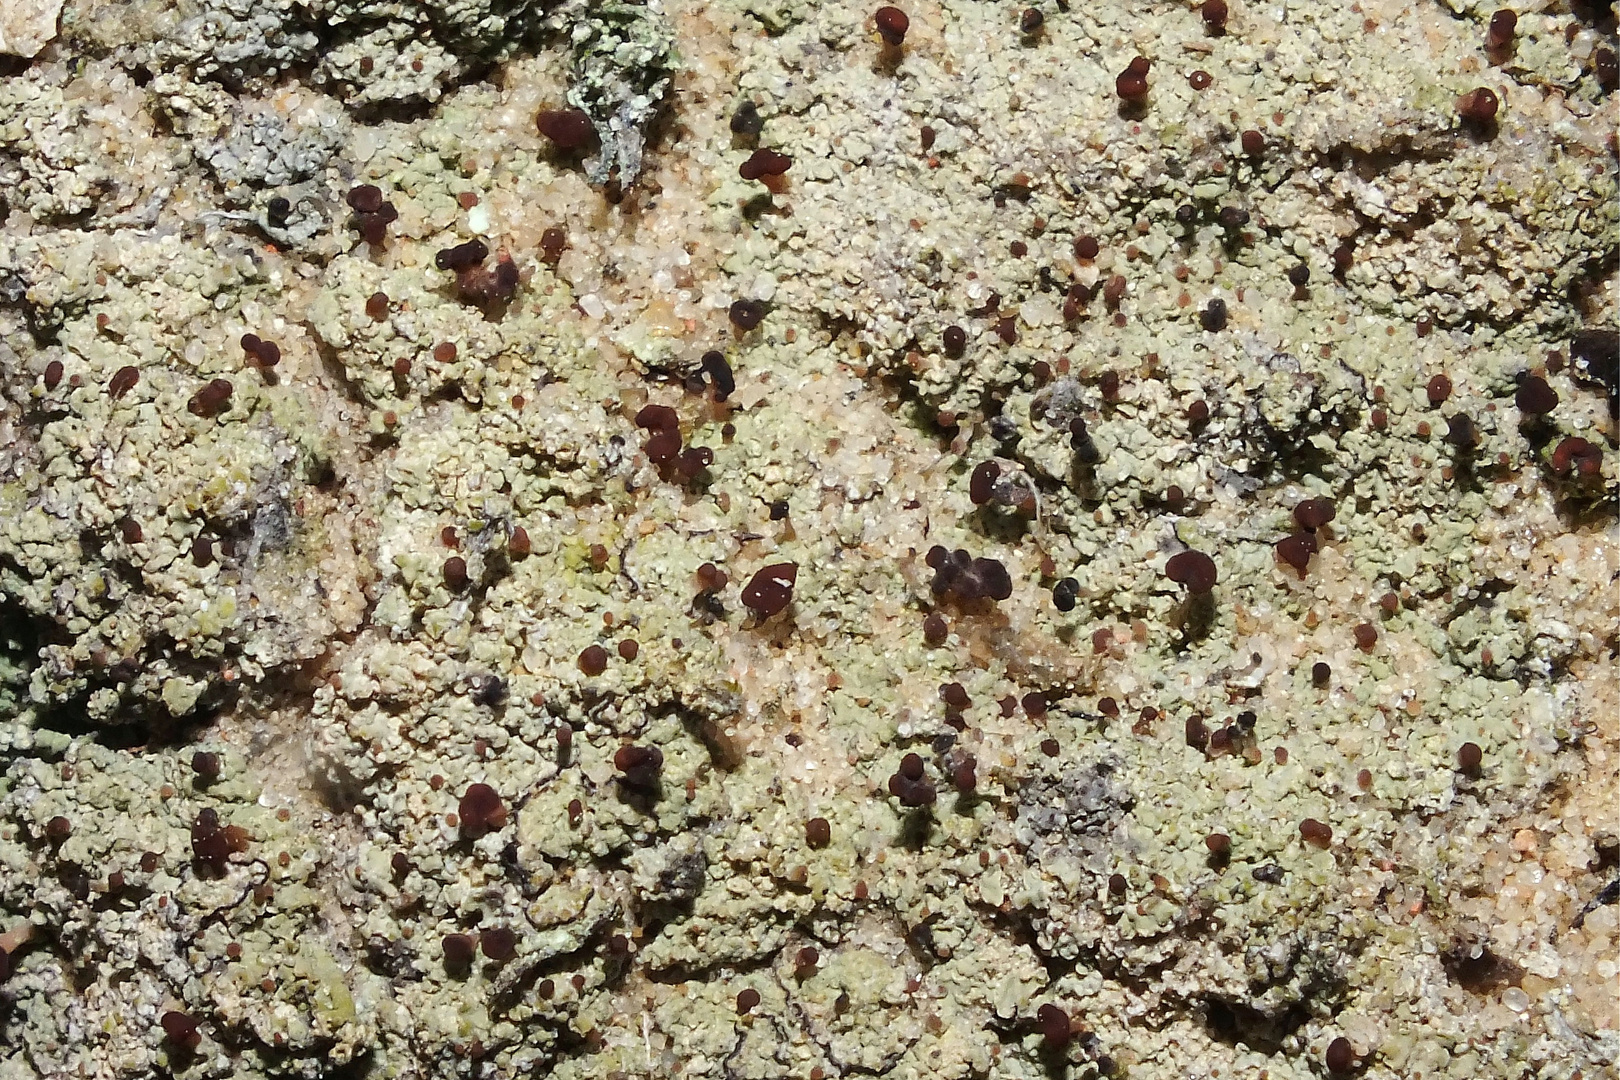 Braune Köpfchenflechte (Baeomyces rufus)